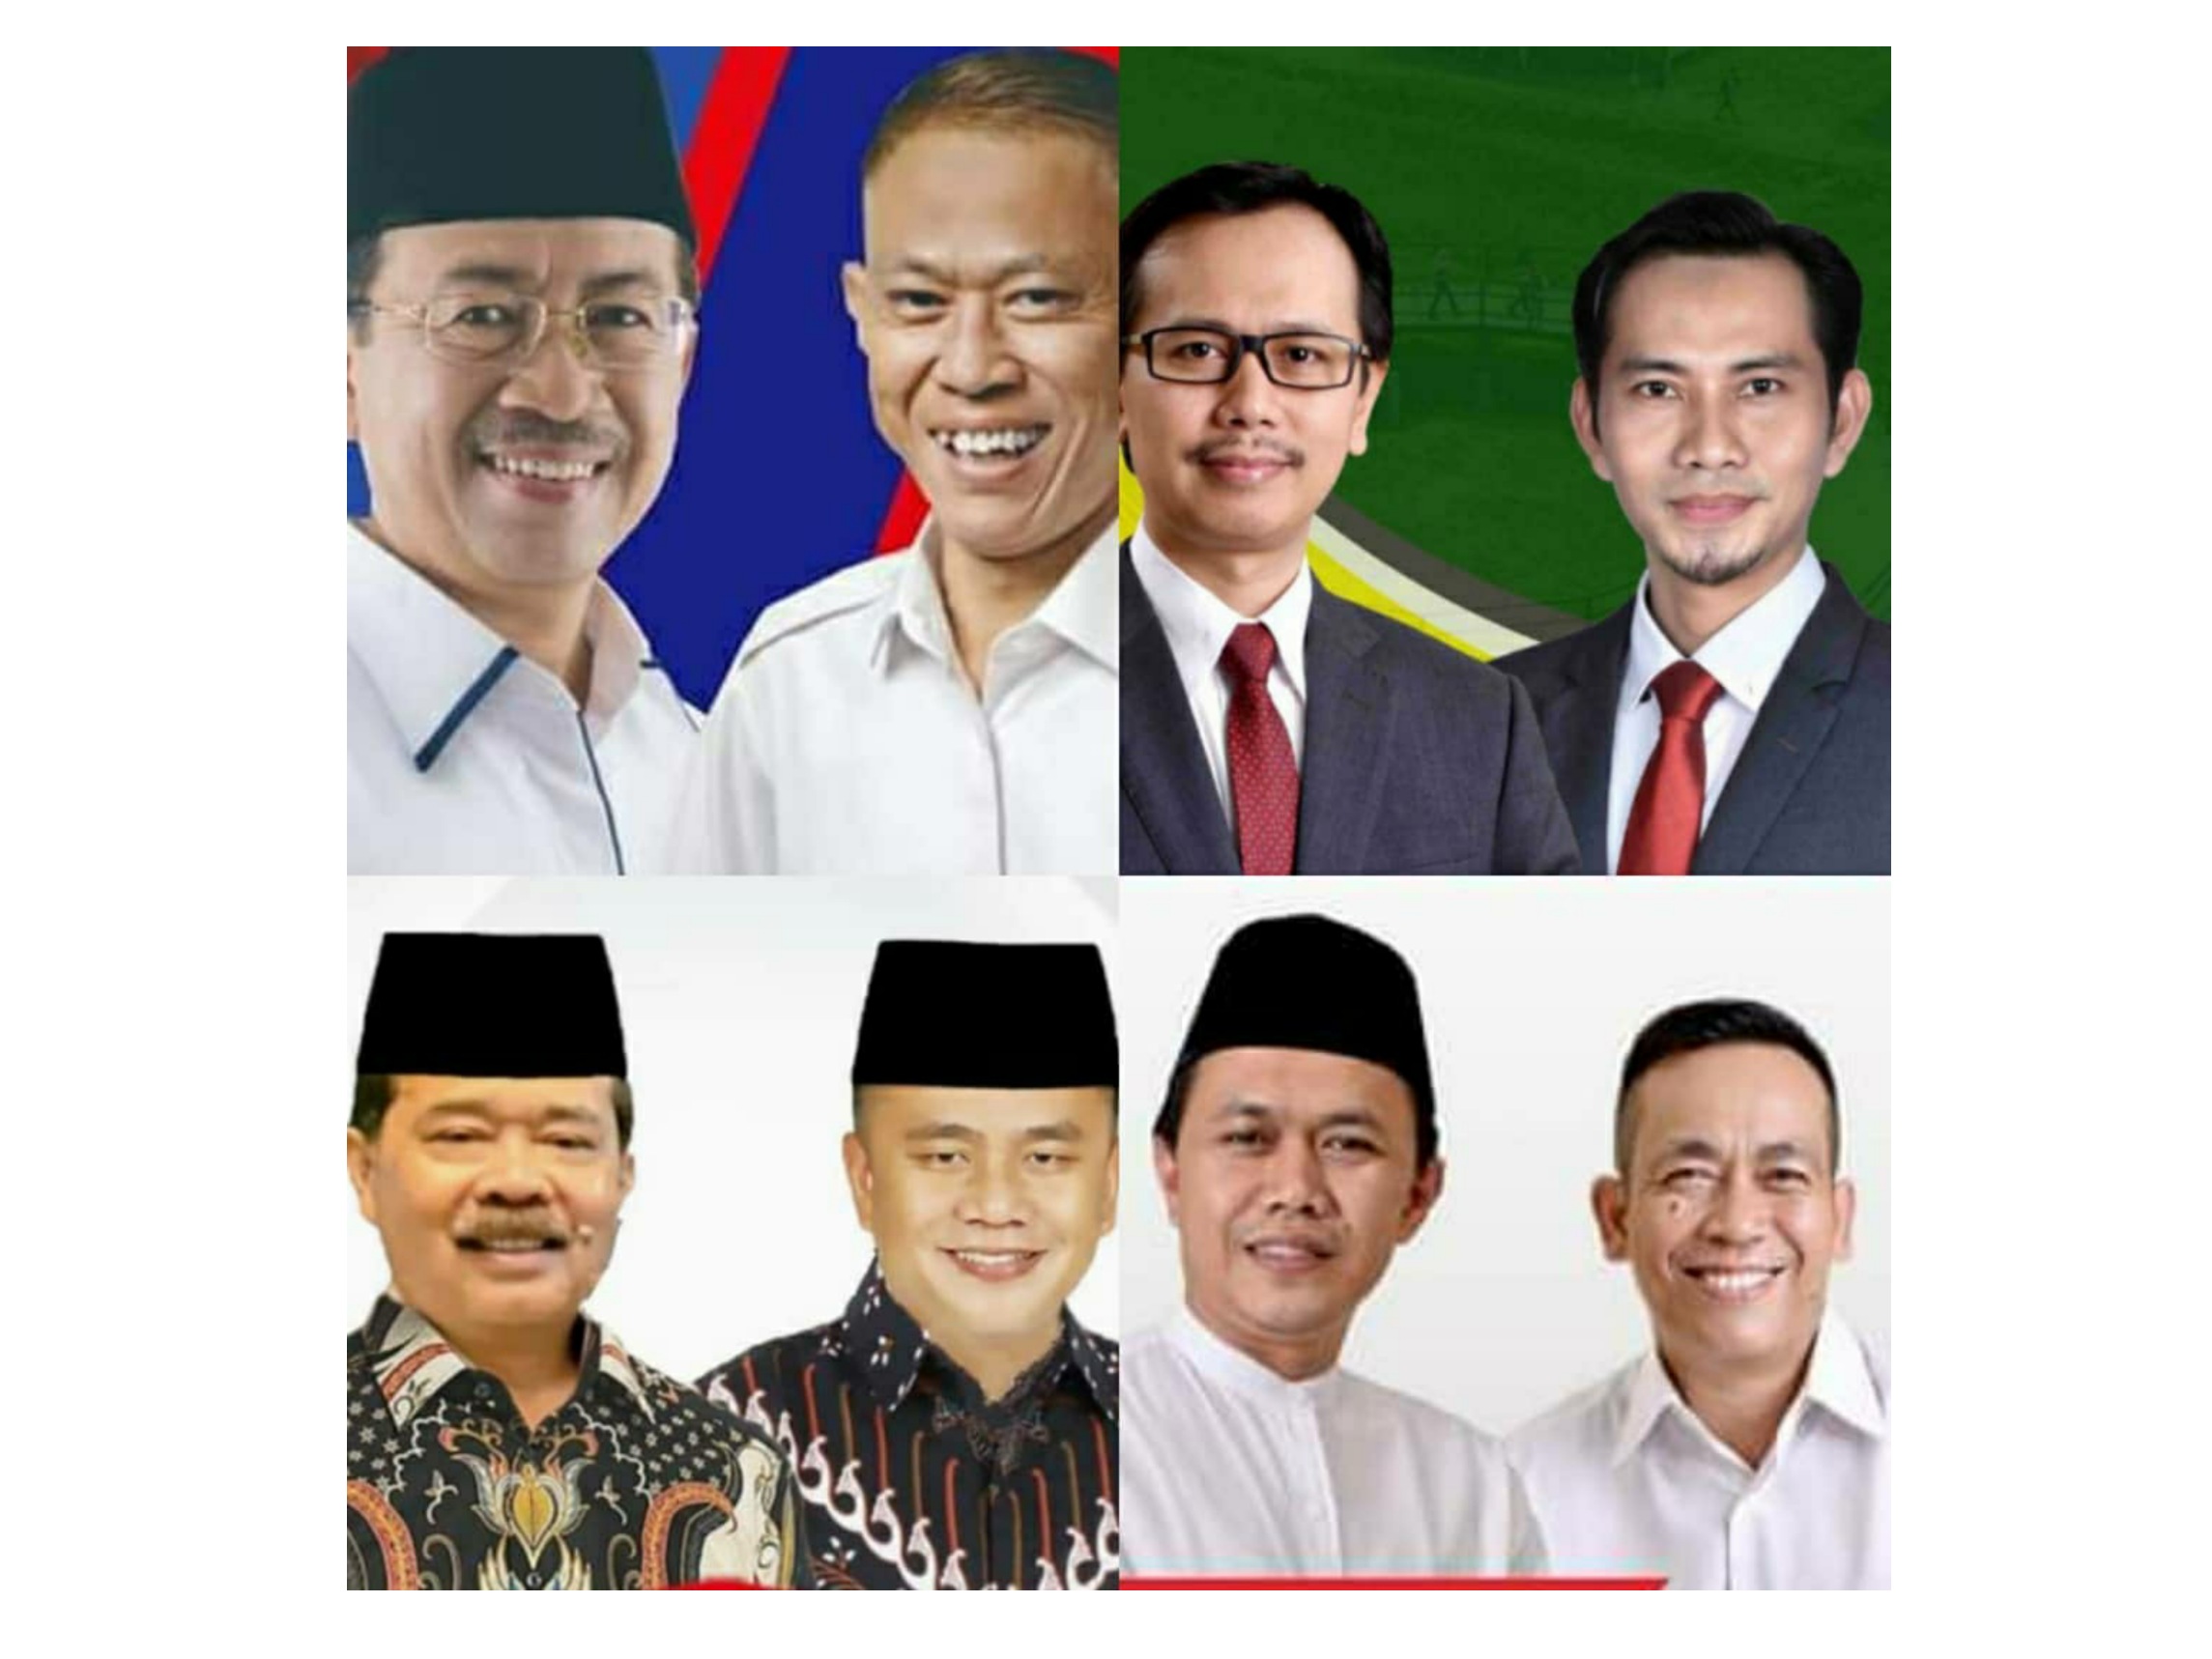  Inilah 4 Pasangan Kandidat Bakal Calon Bupati Wakil Bupati Cianjur 2020-2025